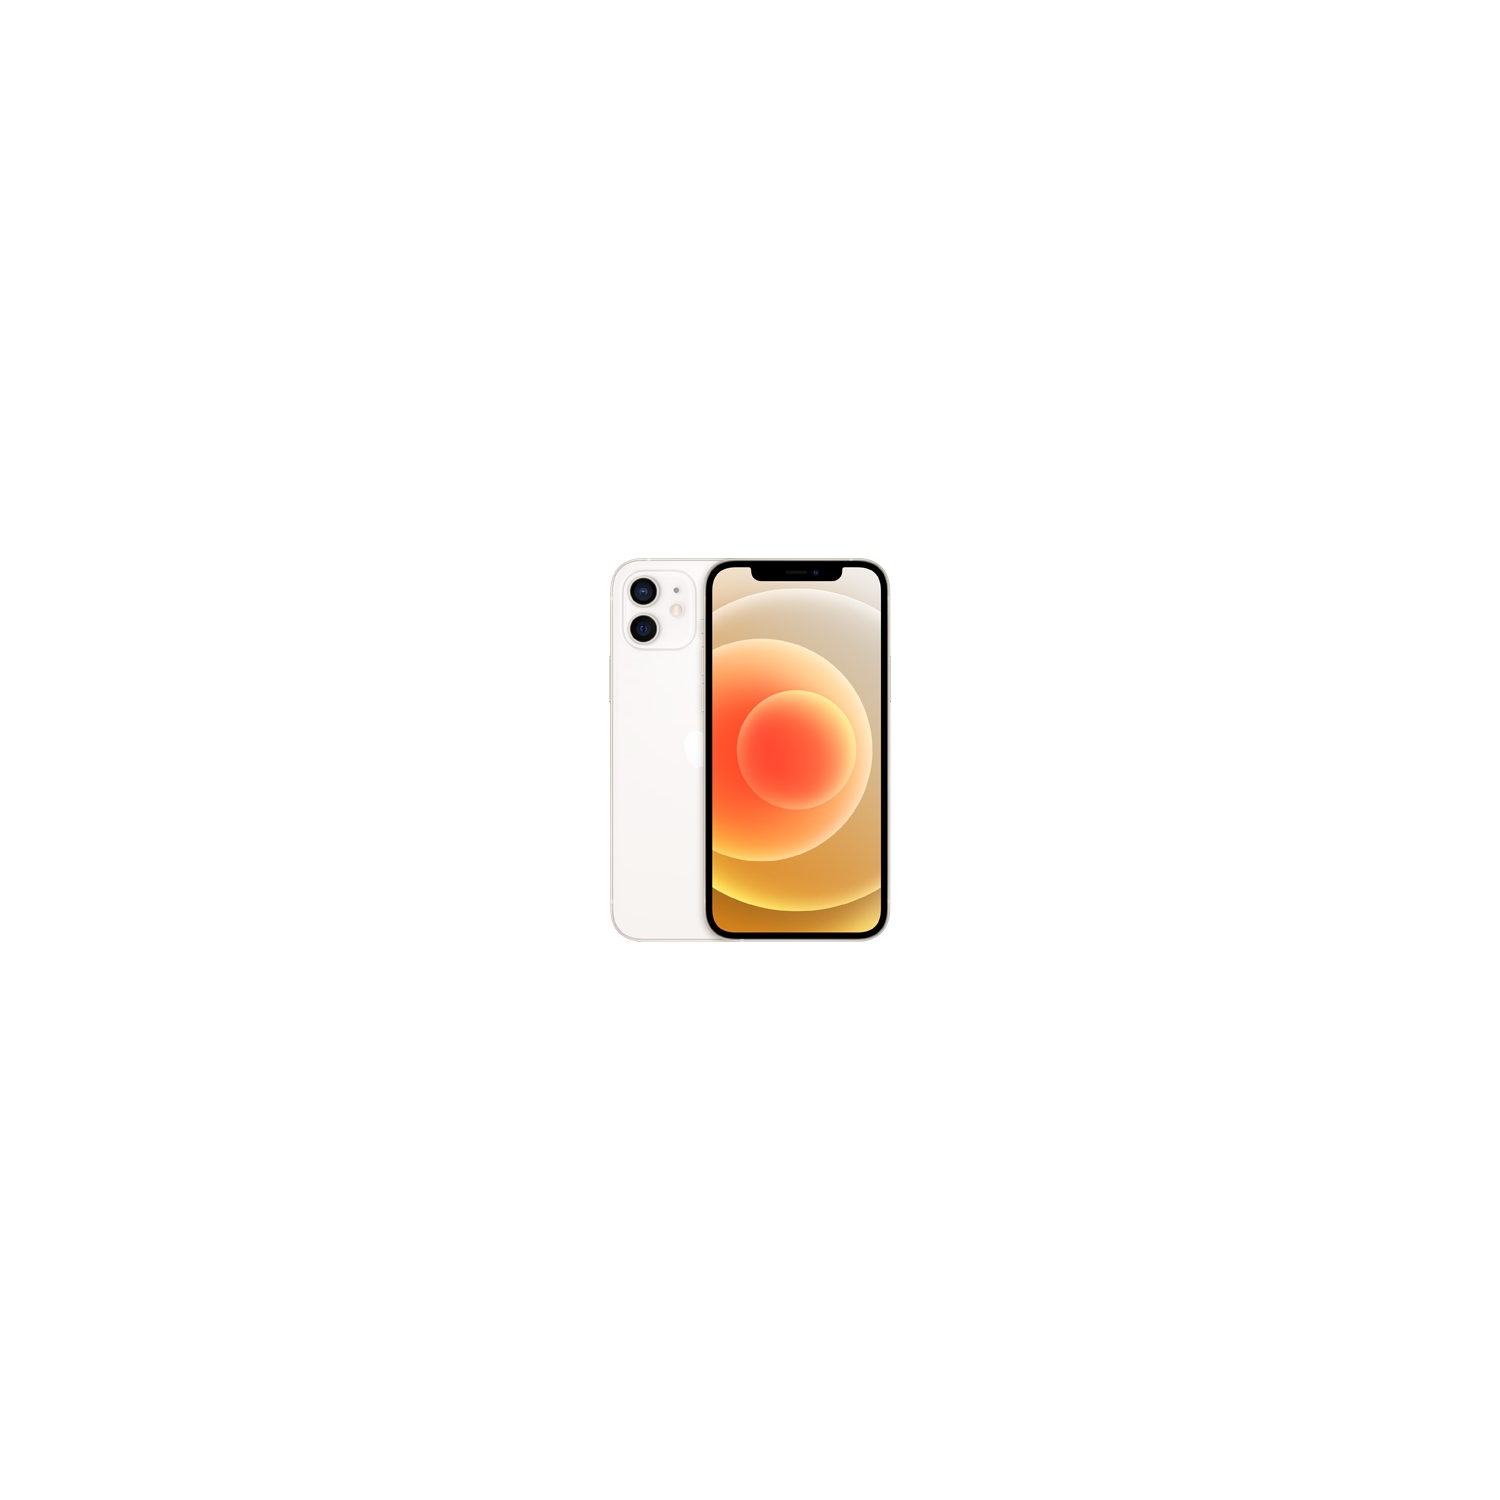 Apple Iphone 12 64GB - Unlocked - White - Open Box